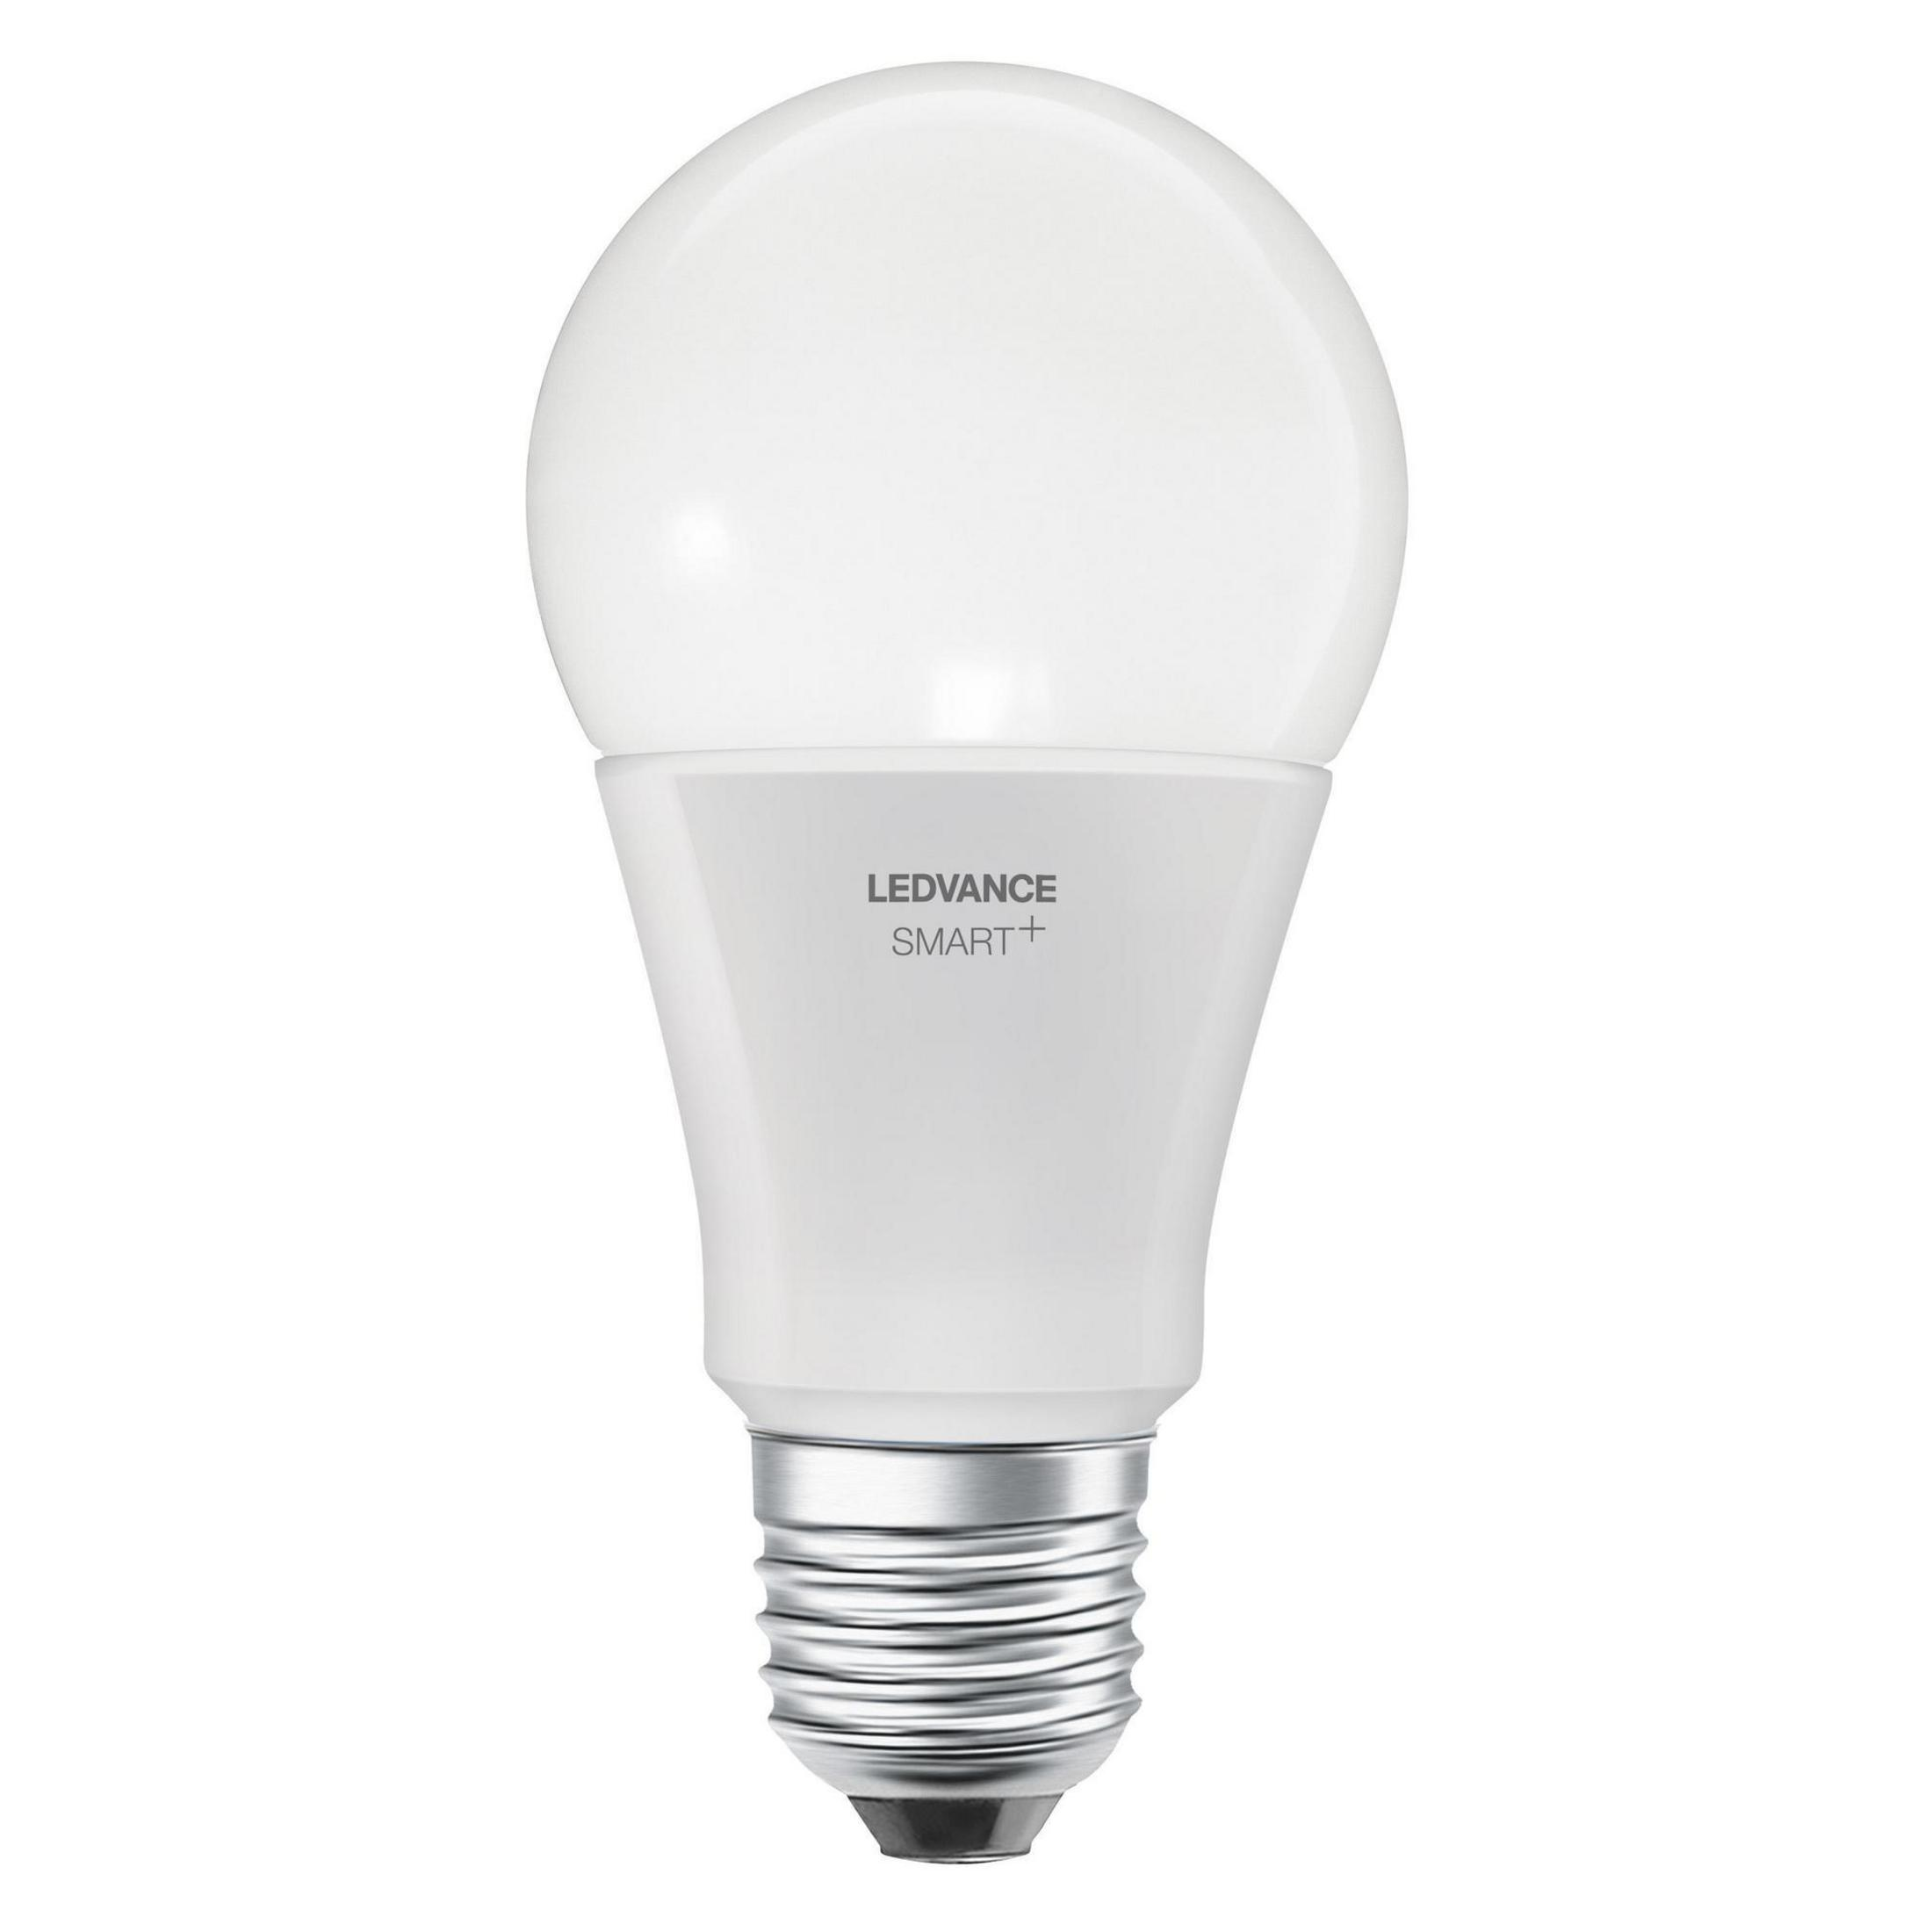 LEDVANCE SMART+ WiFi Classic Tunable White Lichtfarbe LED Lampe änderbar